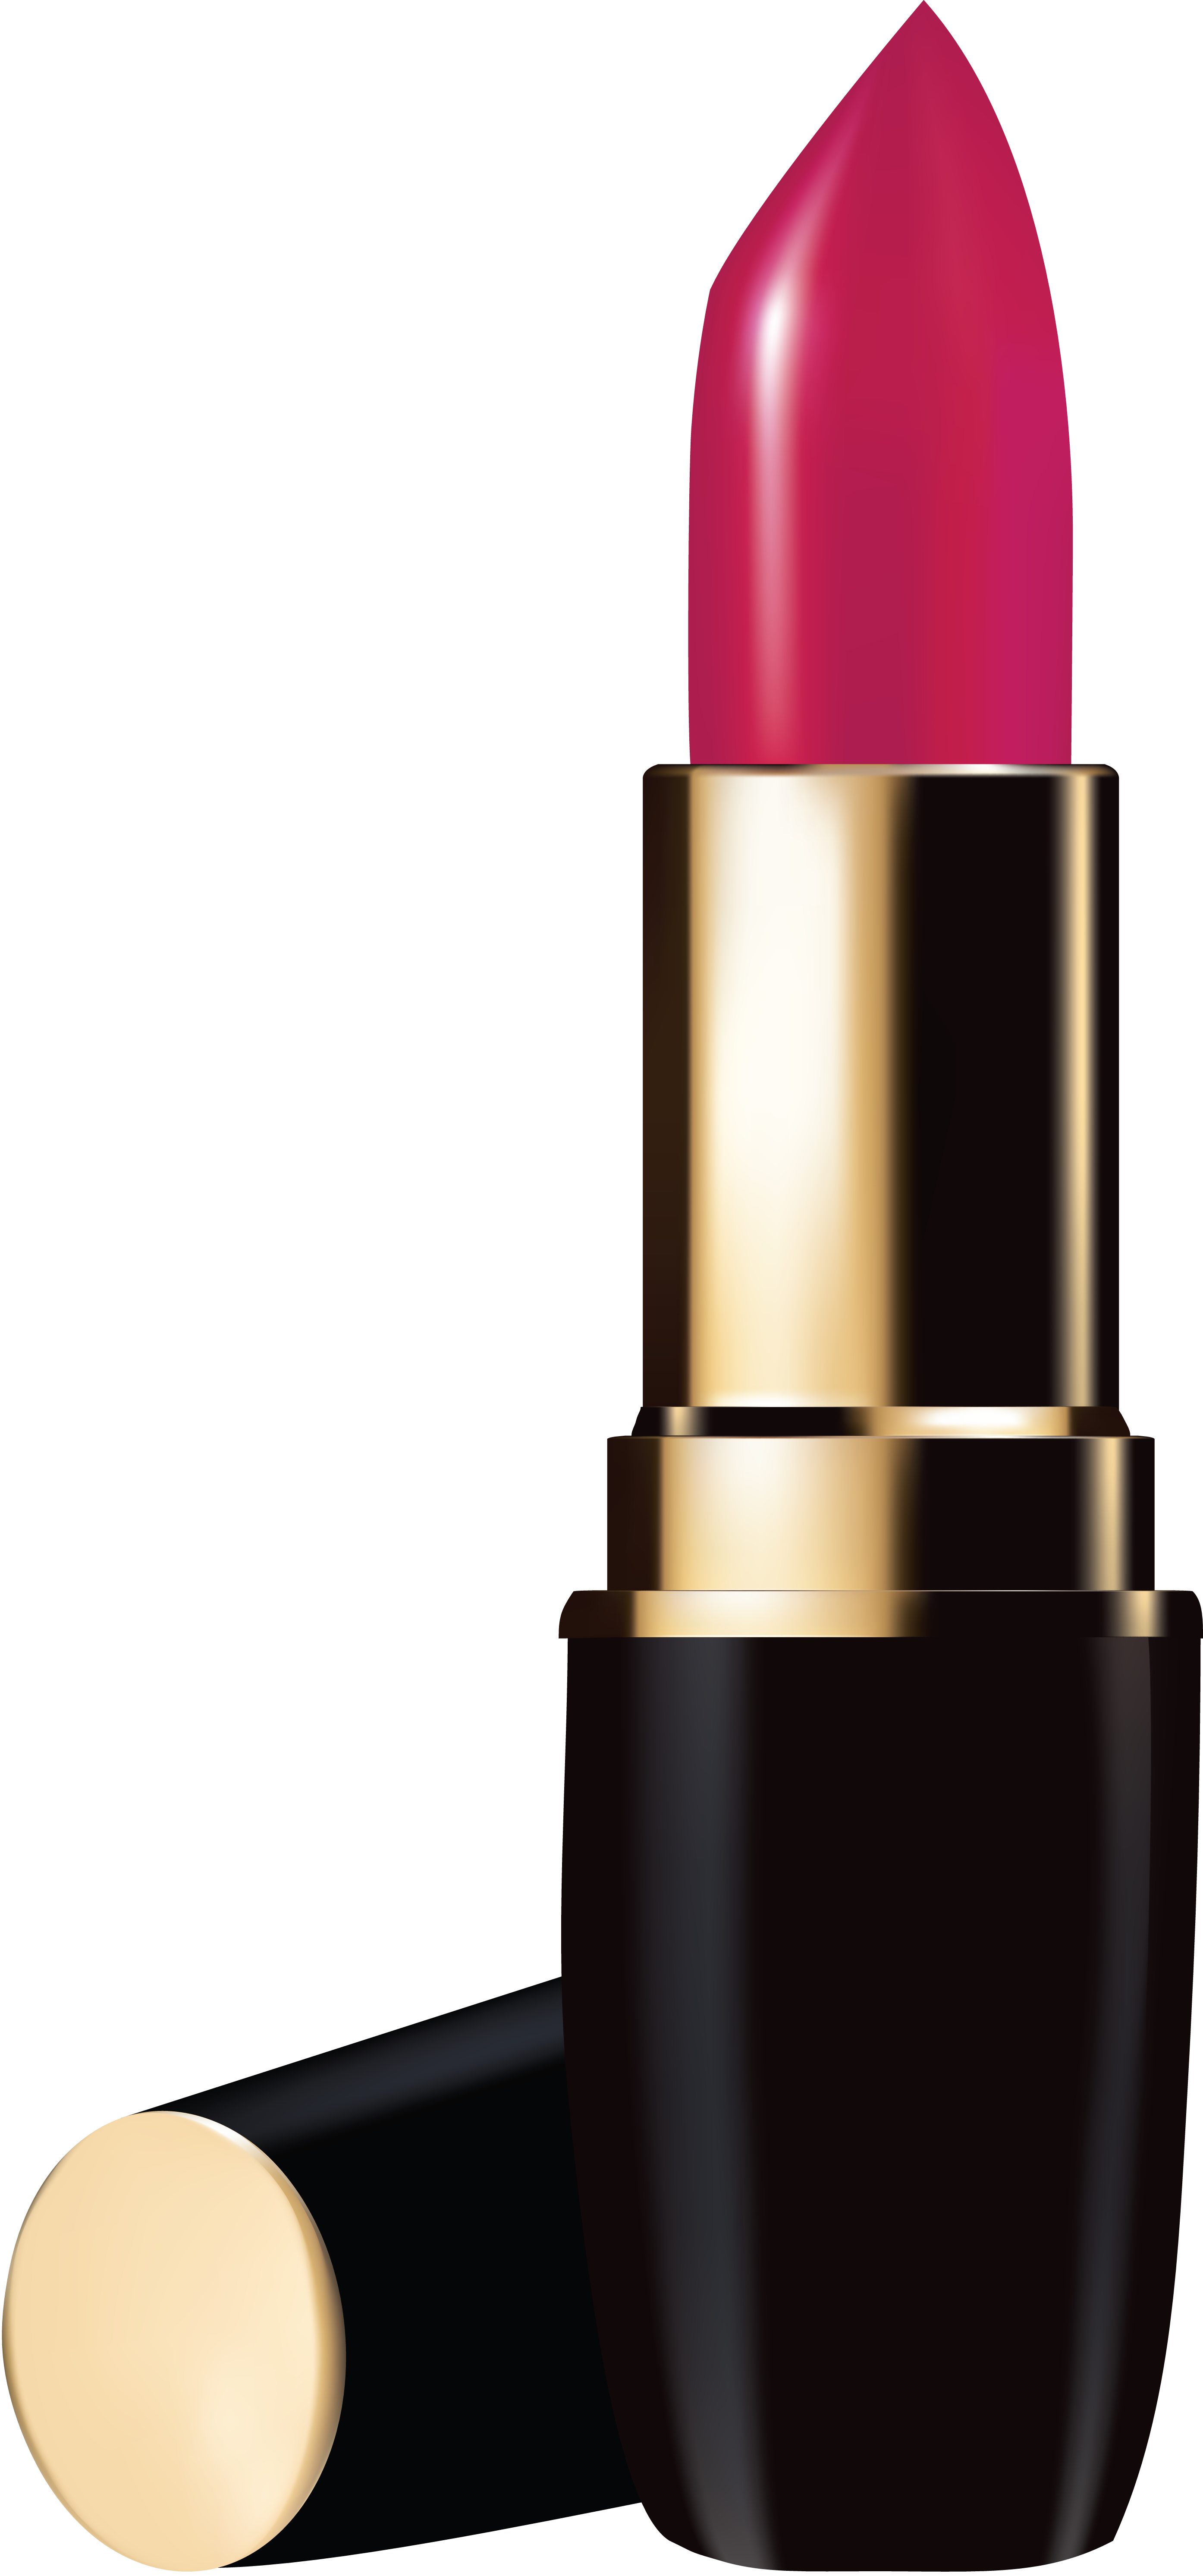 Lipstick PNG HD - 147169